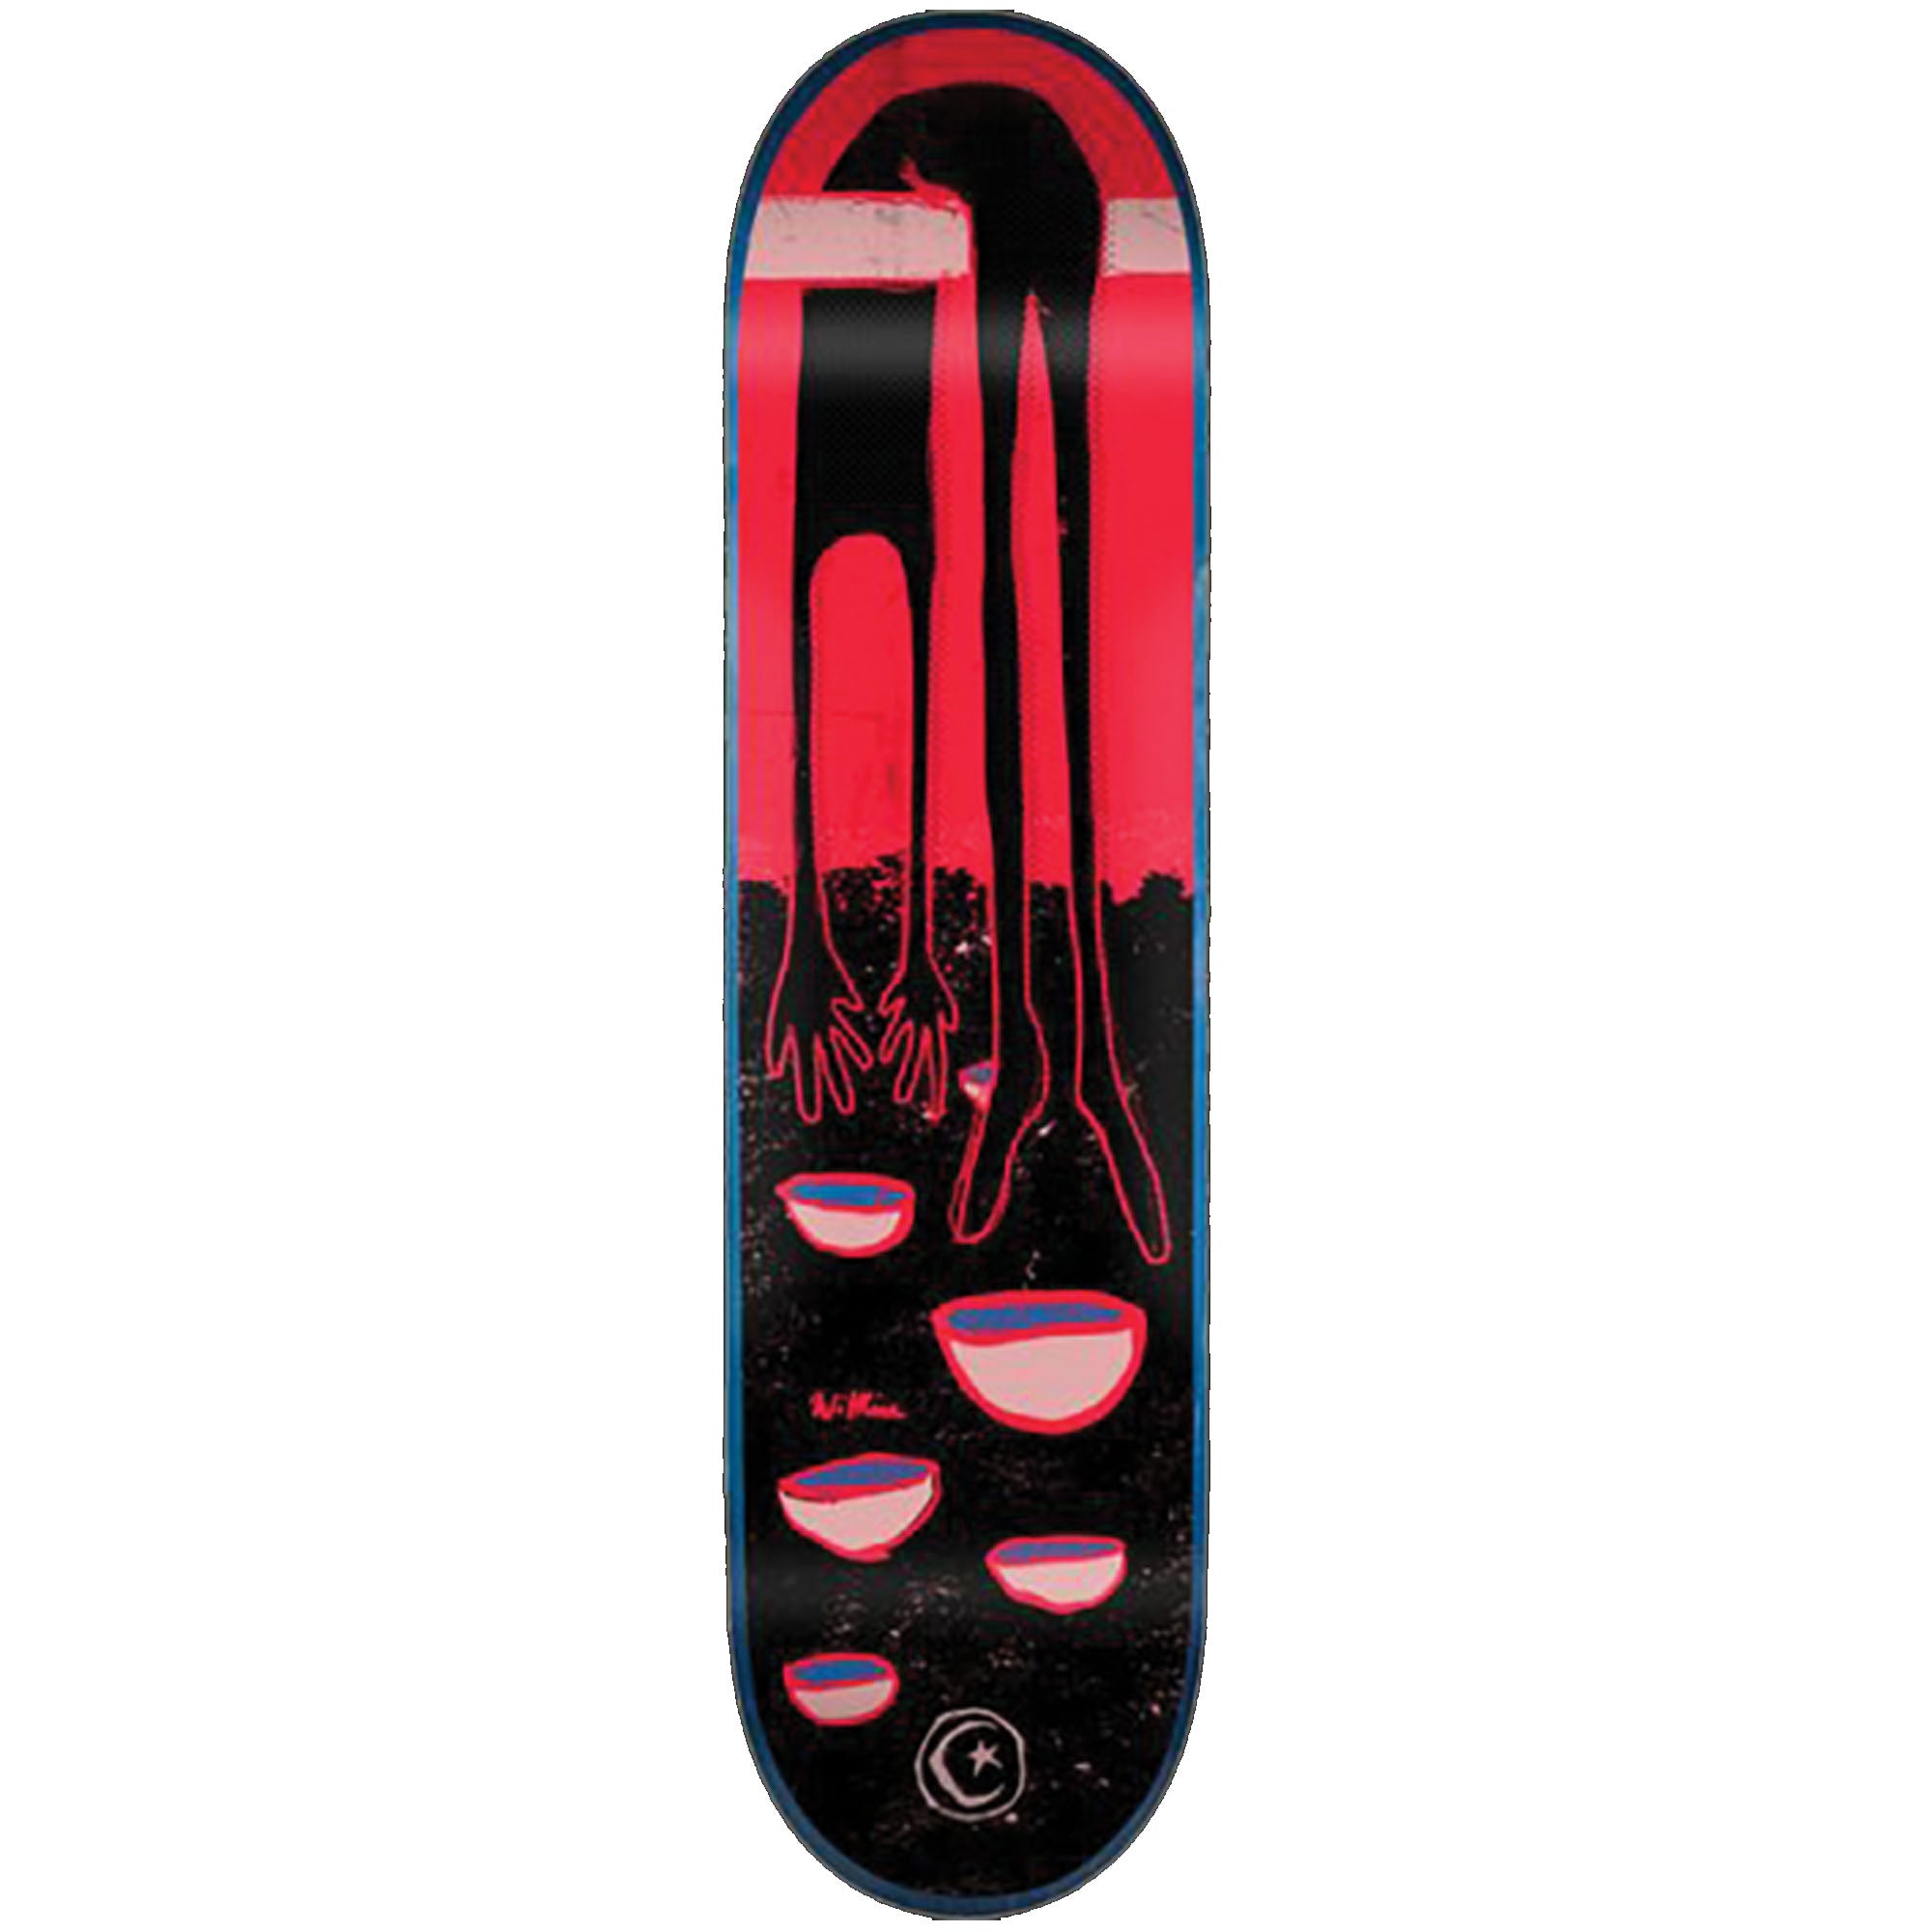 Foundation Witkin Skin Suit 8.5" Skateboard Deck